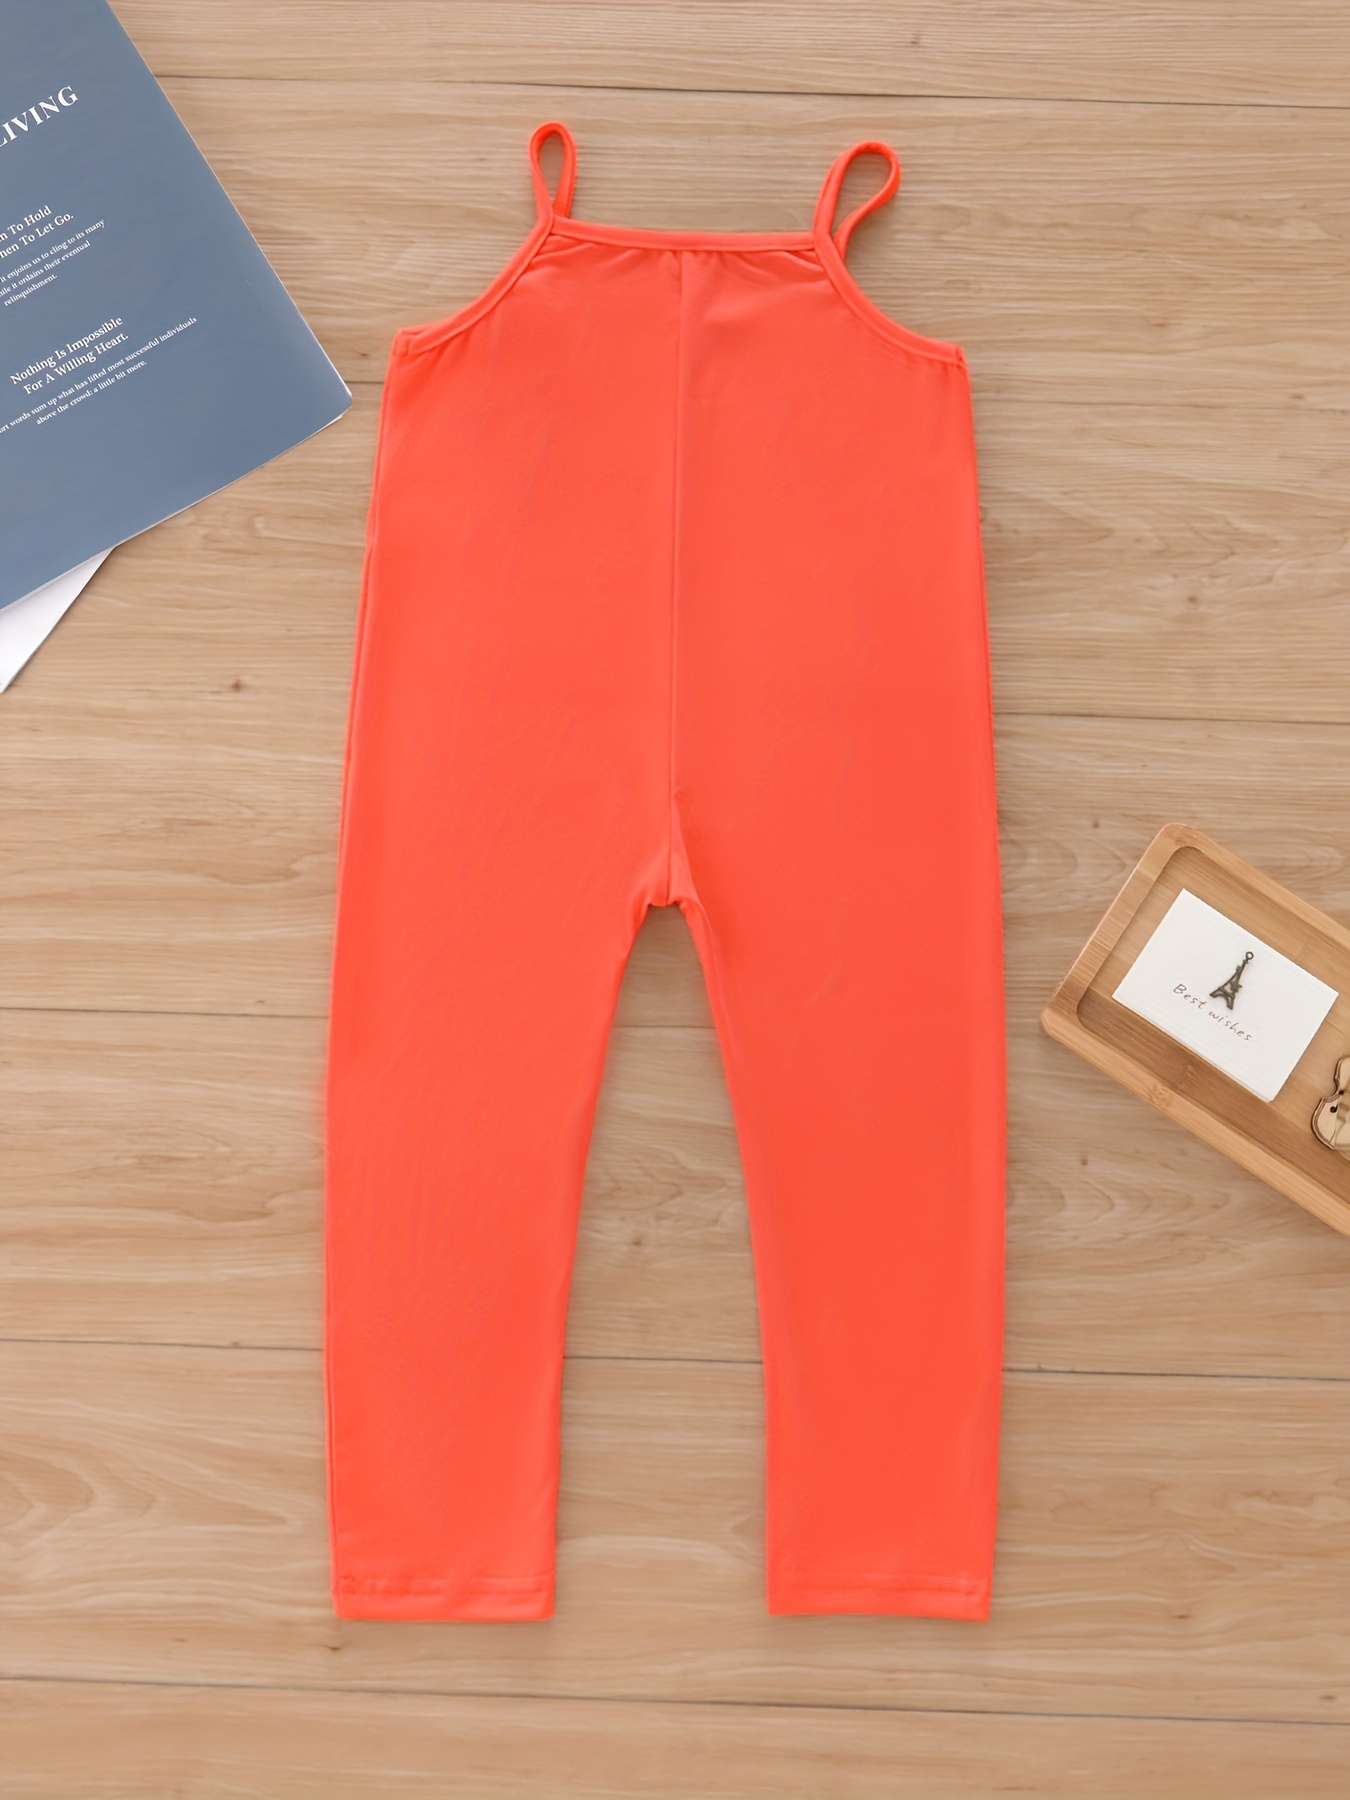 Summer Girls Outfit Orange Linen Jumpsuit Vintage Jumpsuit Girl Clothes  Kids Romper Baby Shower Gift Idea Summer Overall 